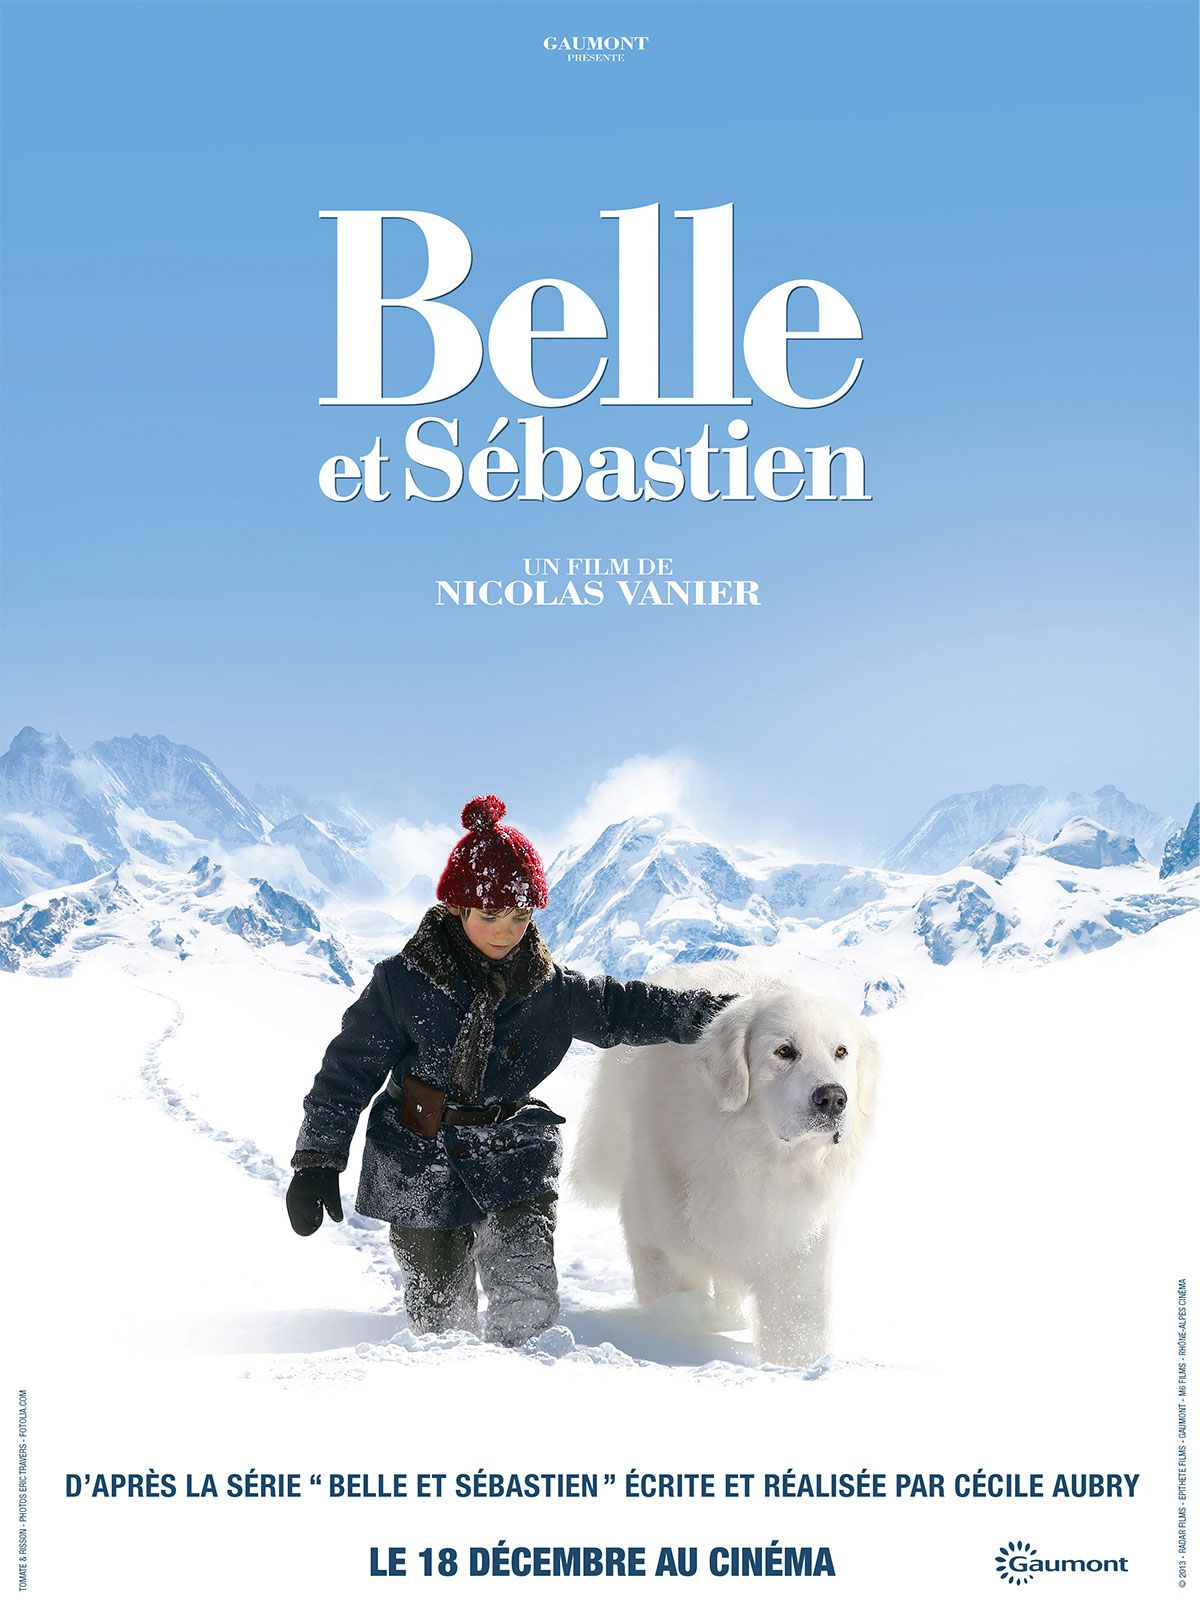 Belle et Sébastien - Film (2013) streaming VF gratuit complet